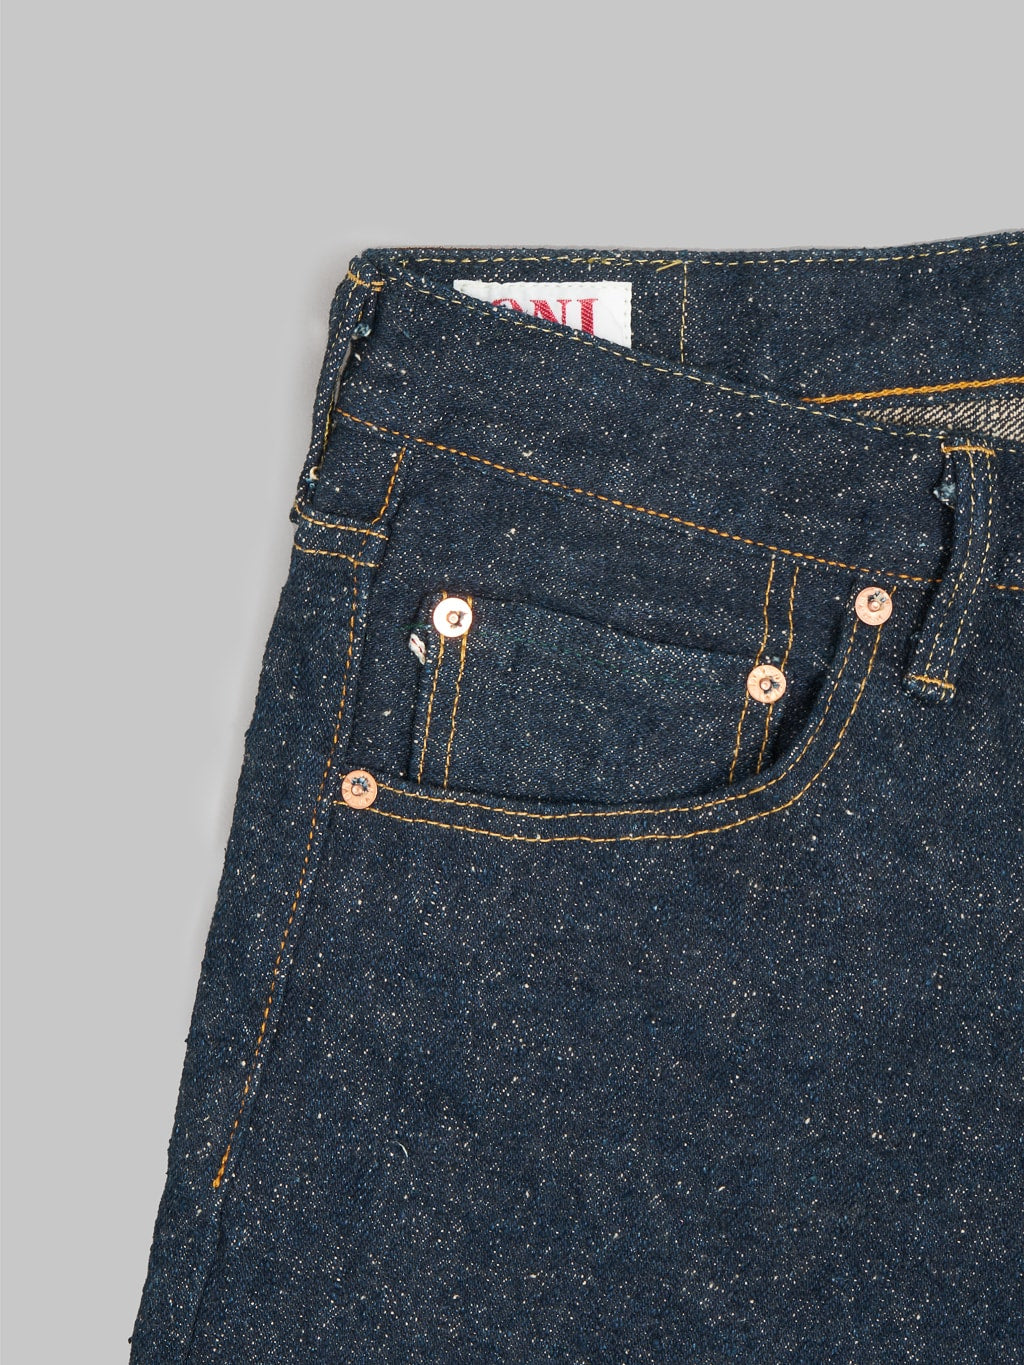 ONI 622 Secret Super Rough 20oz Jeans medium rise